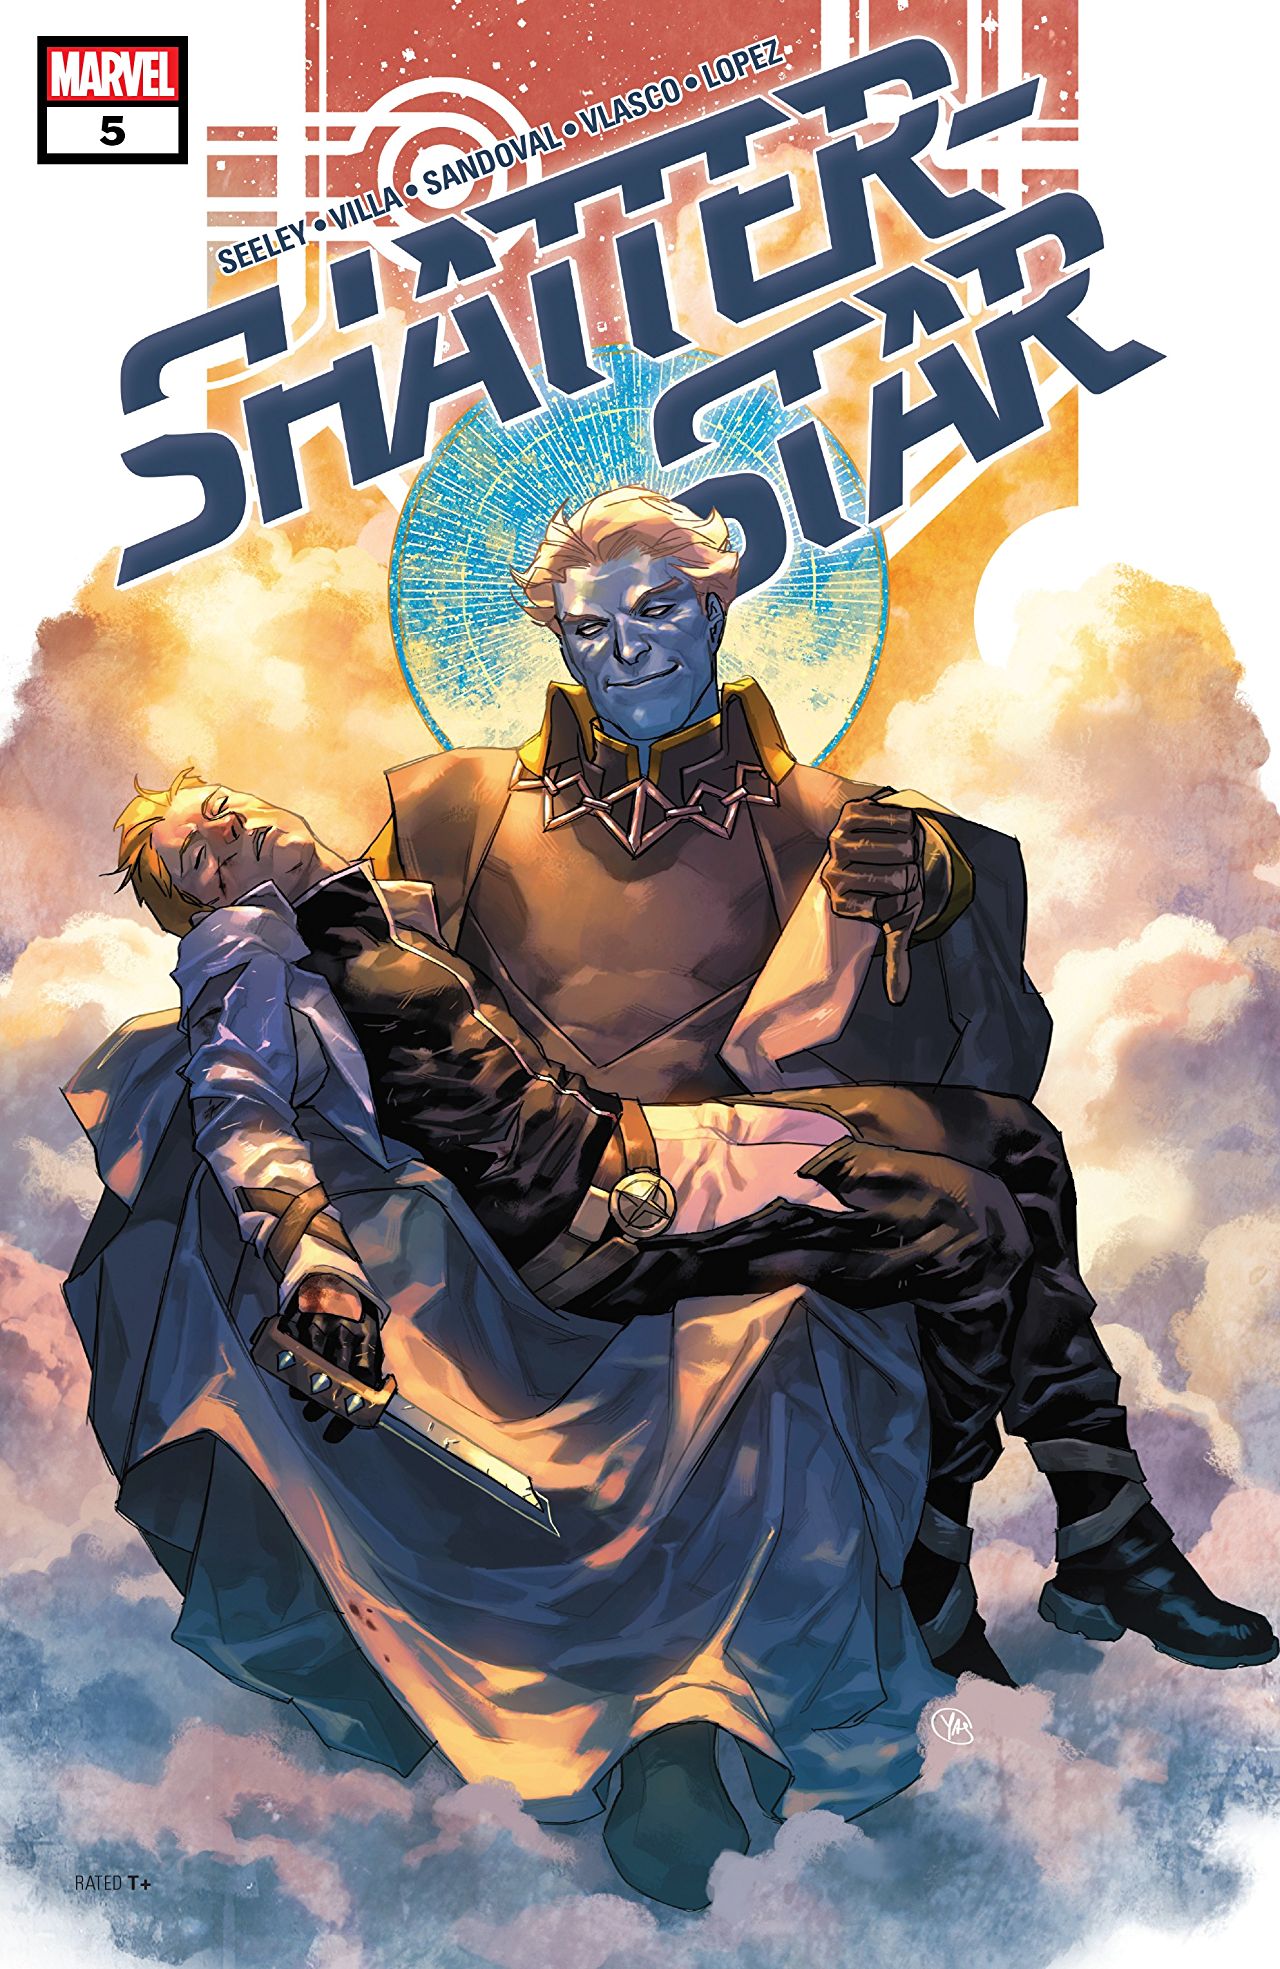 Marvel Preview: Shatterstar #5